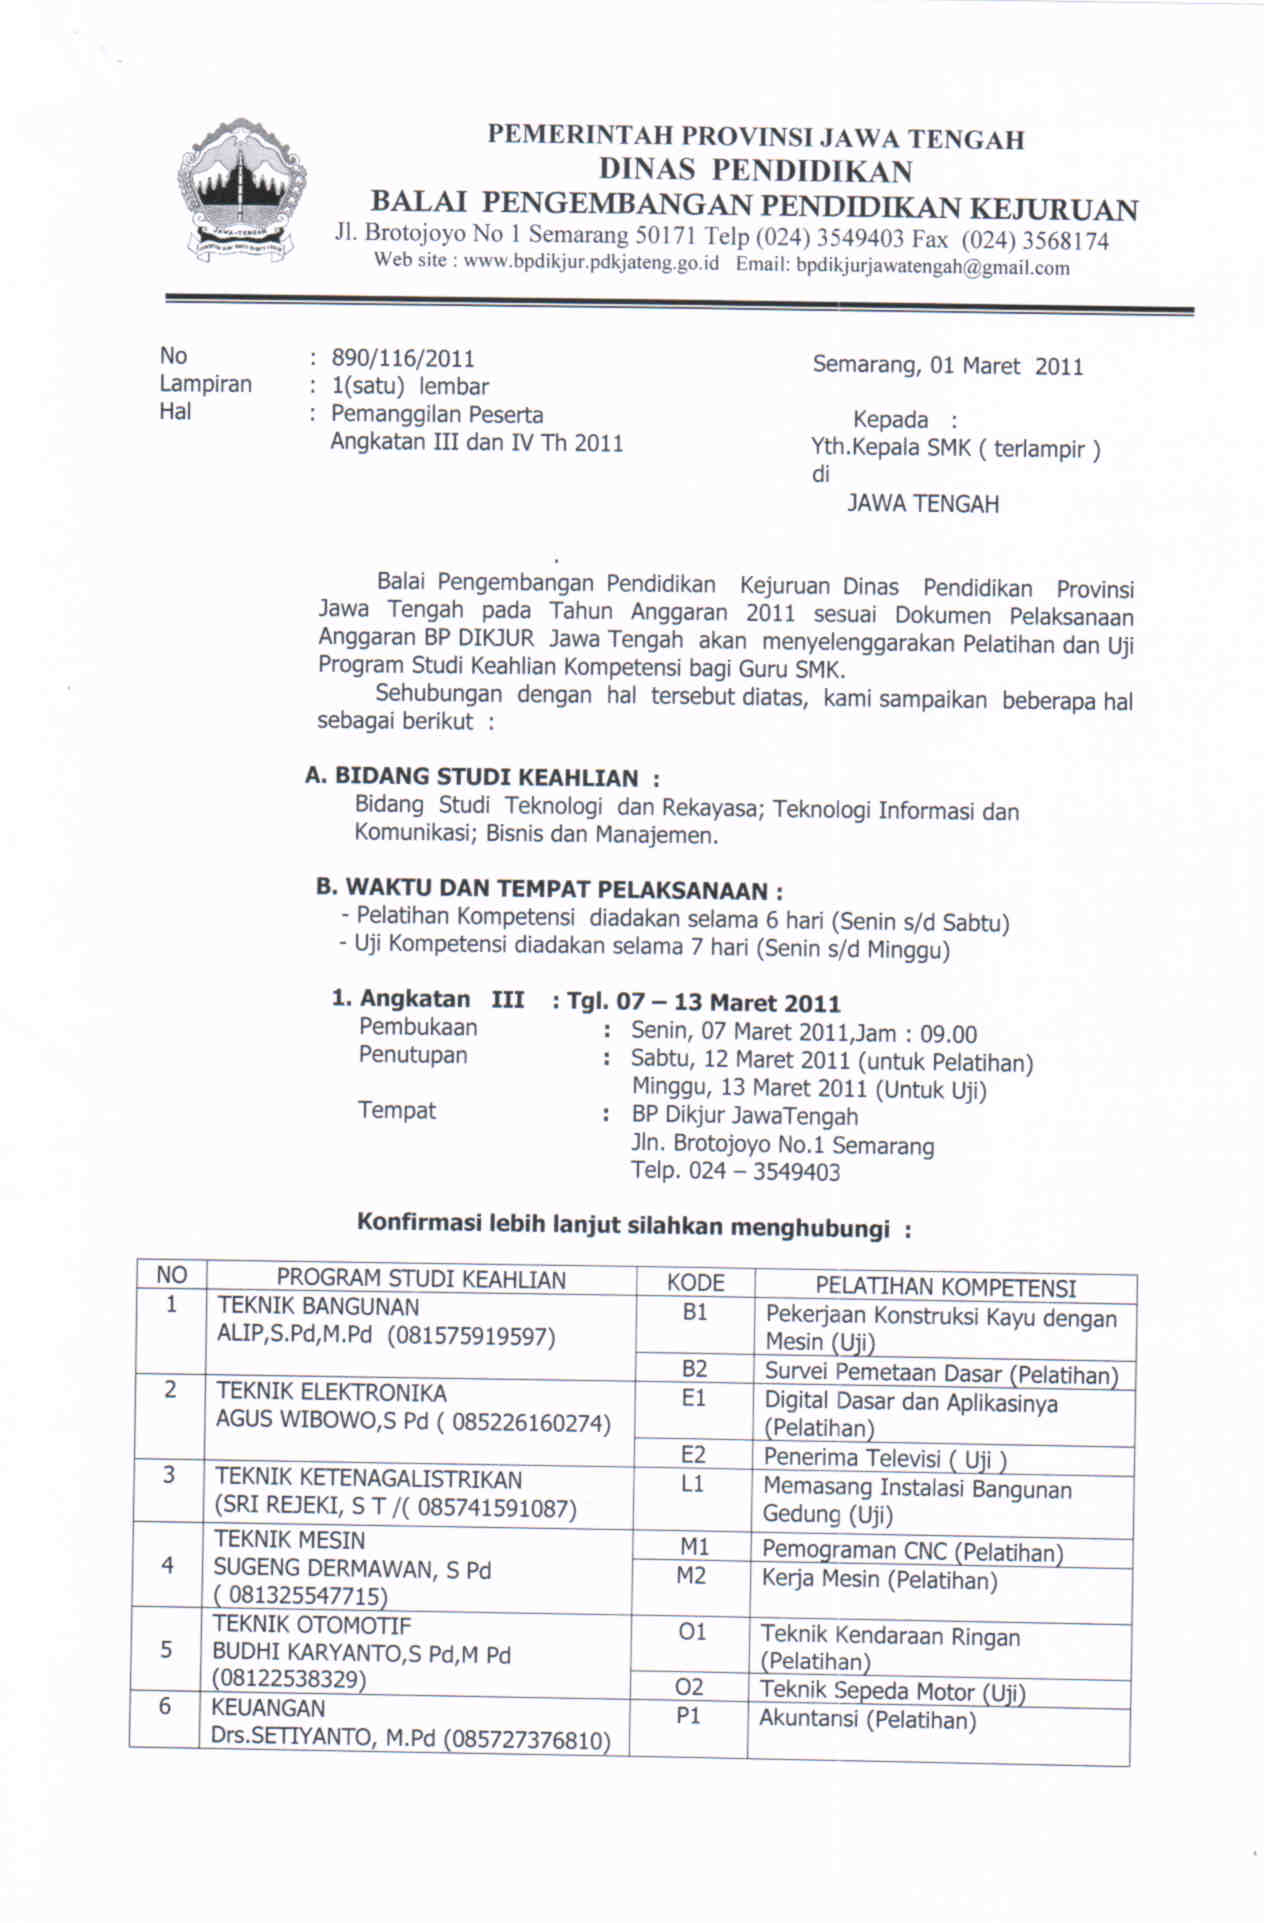 Aneka Contoh Kop Surat Dinas Pendidikan Provinsi Jawa Tengah 45 Untuk Format Kop Surat Unik pada post Contoh Kop Surat Dinas Pendidikan Provinsi Jawa Tengah